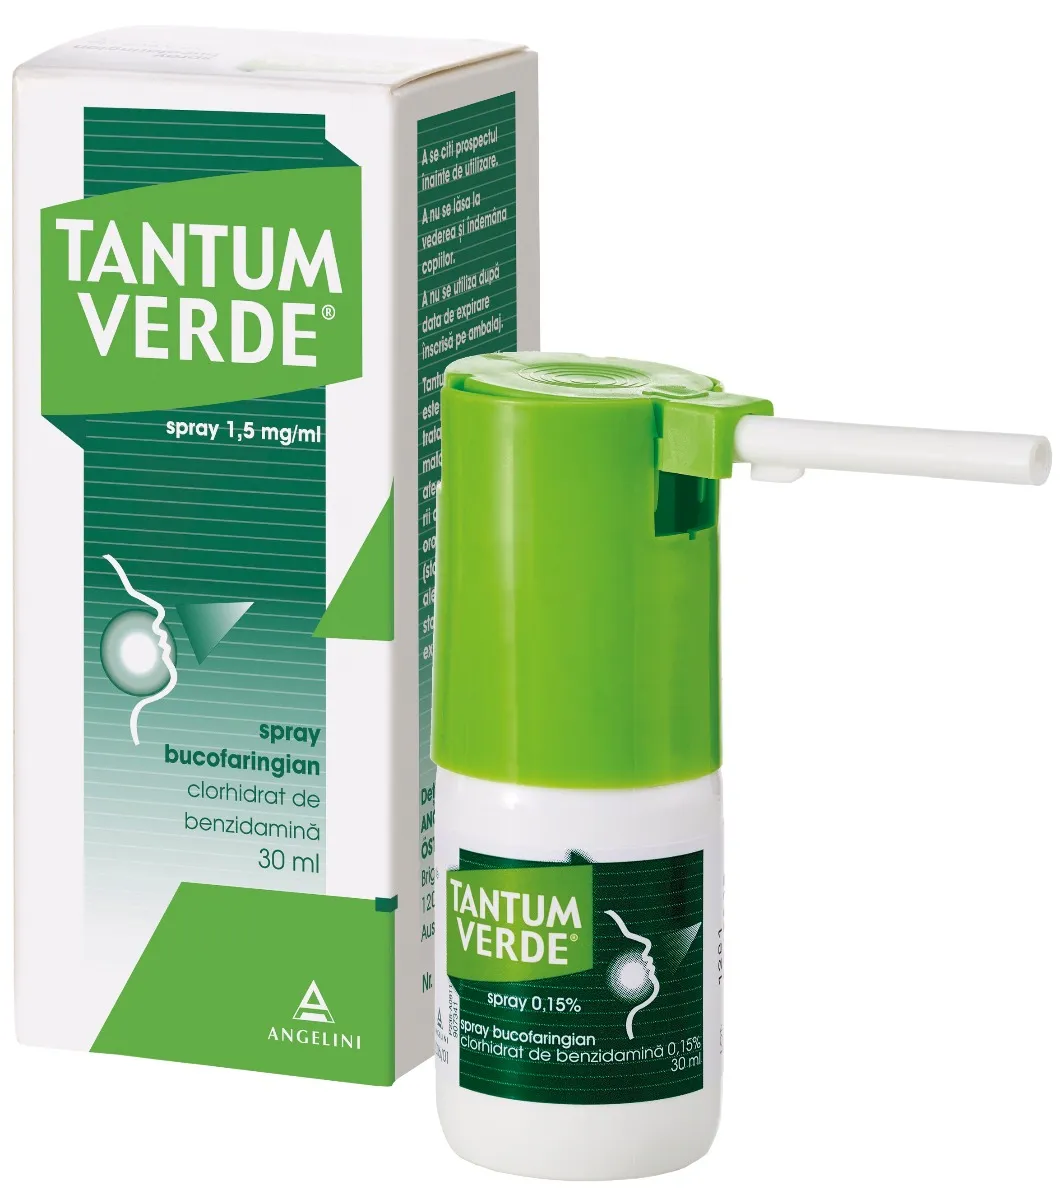 Tantum Verde spray 1,5 mg/ml, 30ml, Angelini 